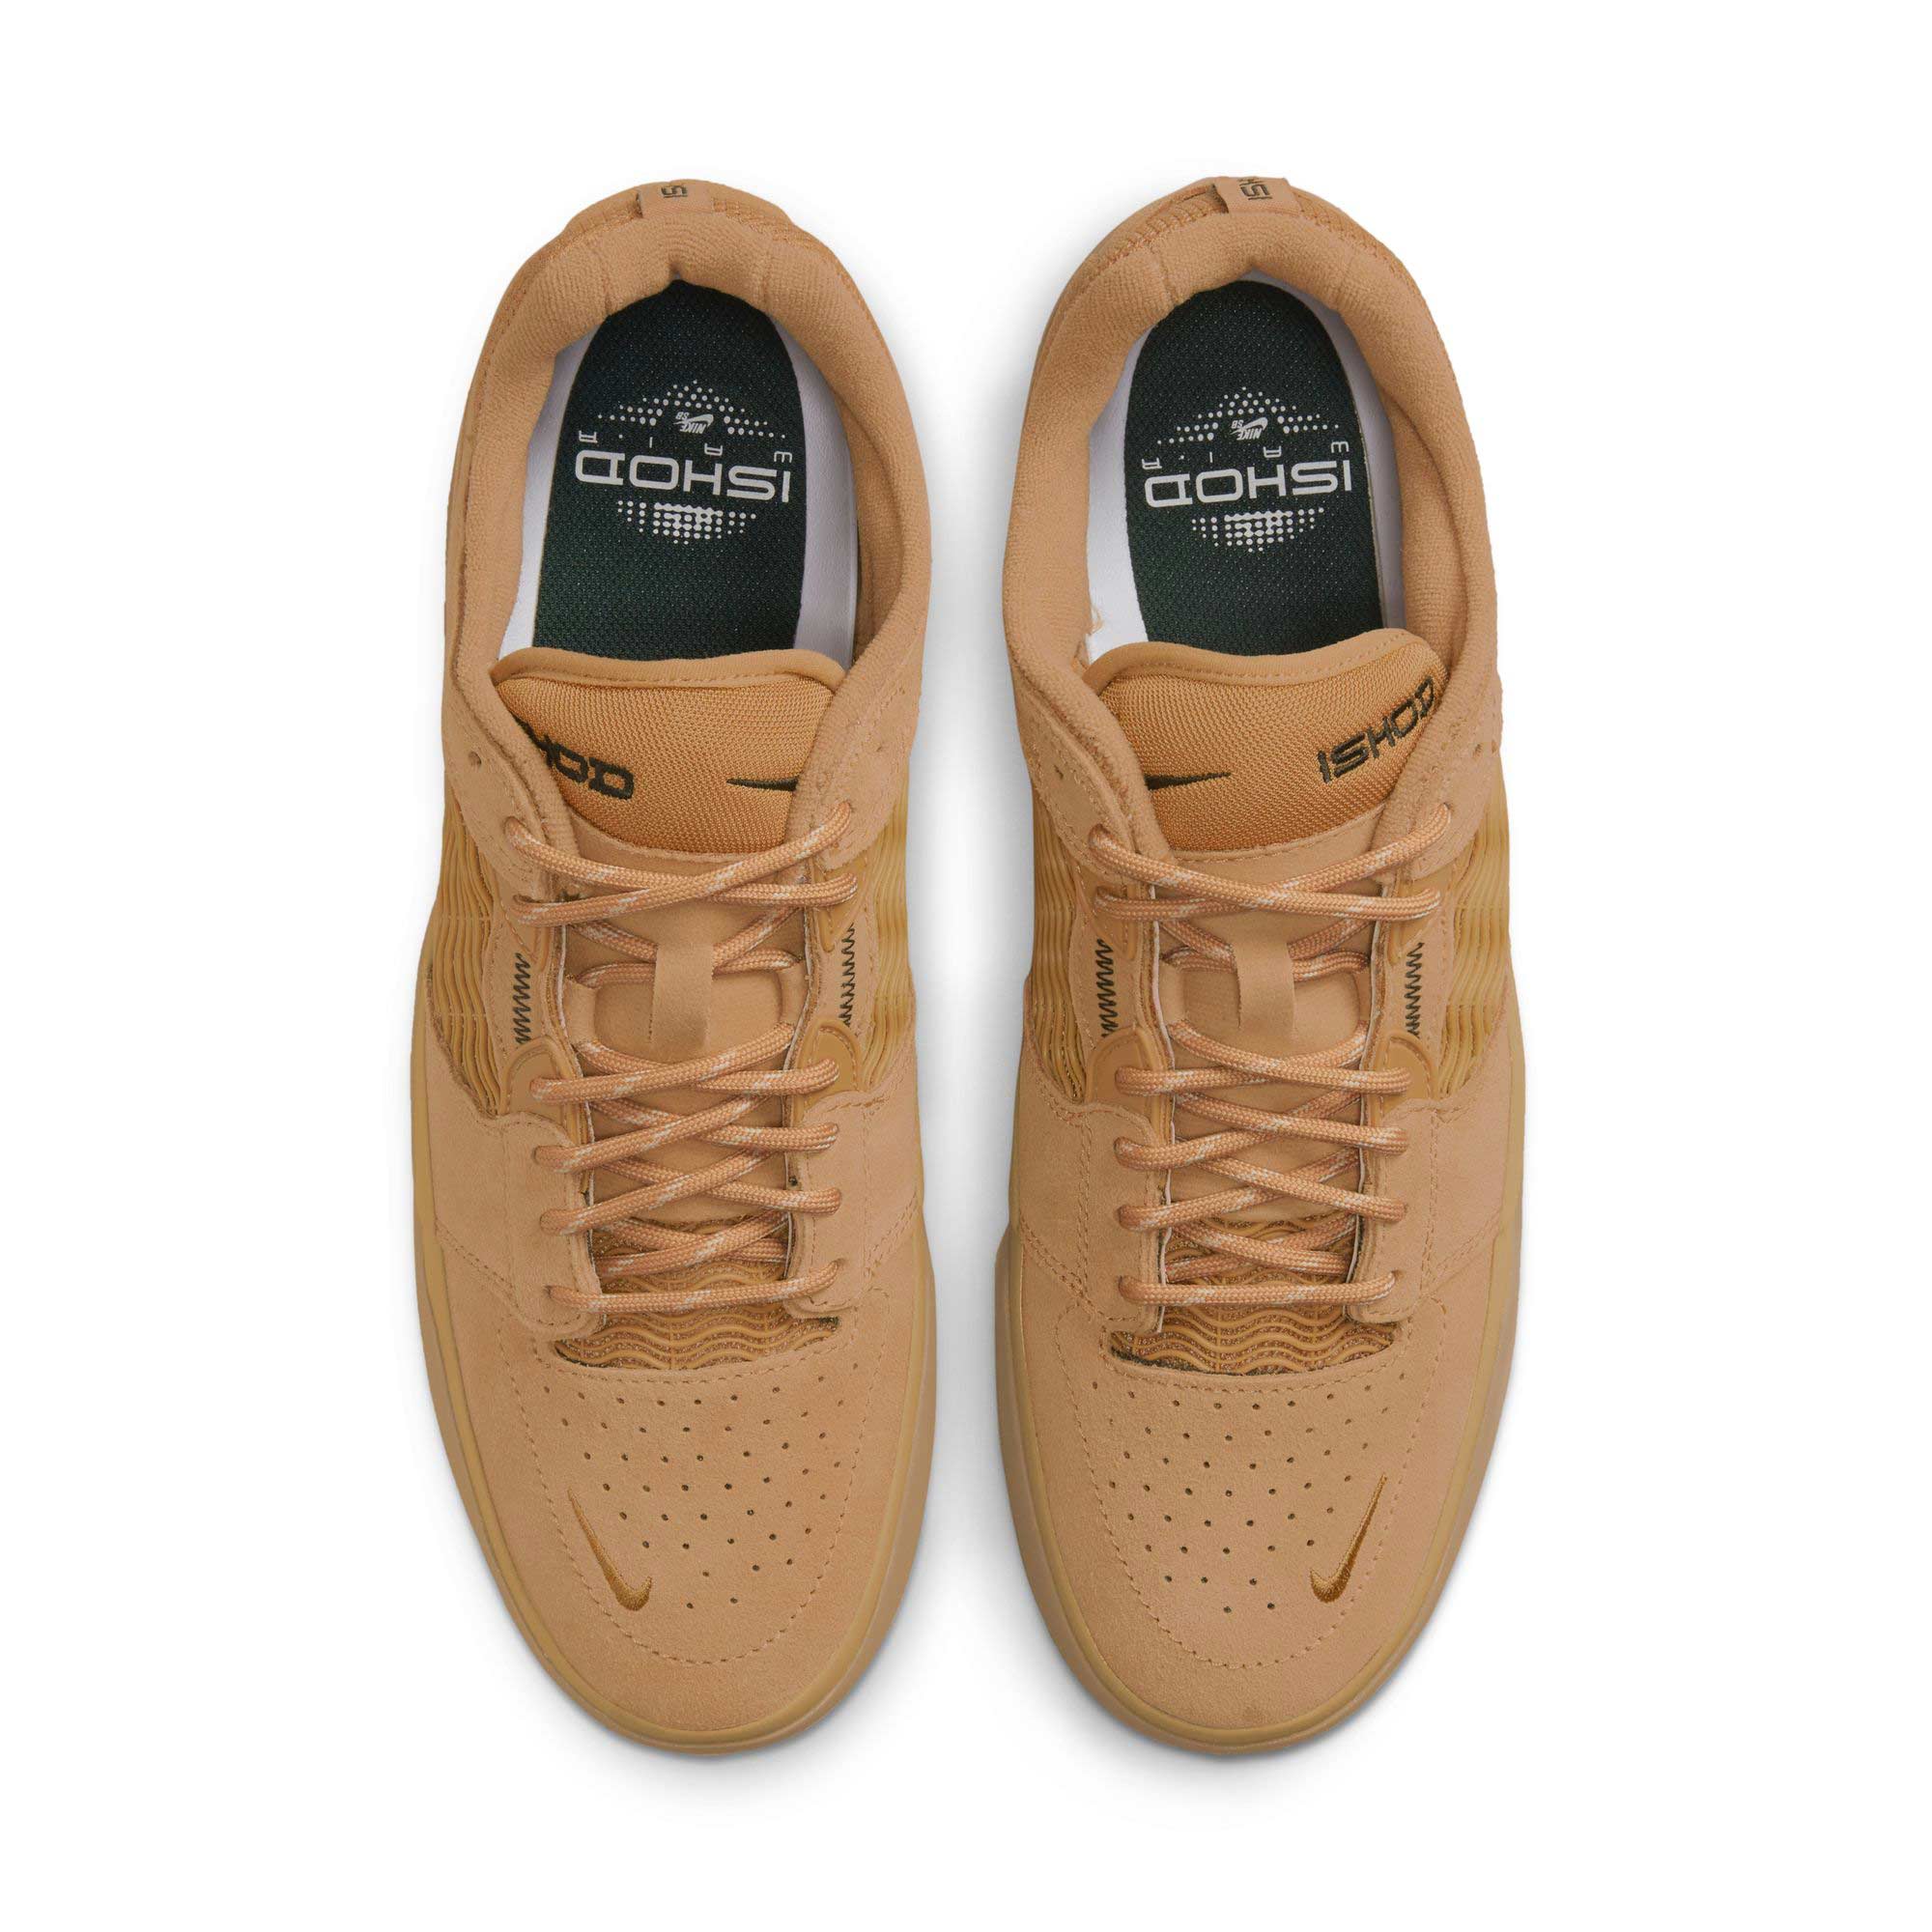 Nike SB Ishod Wair Premium Flax